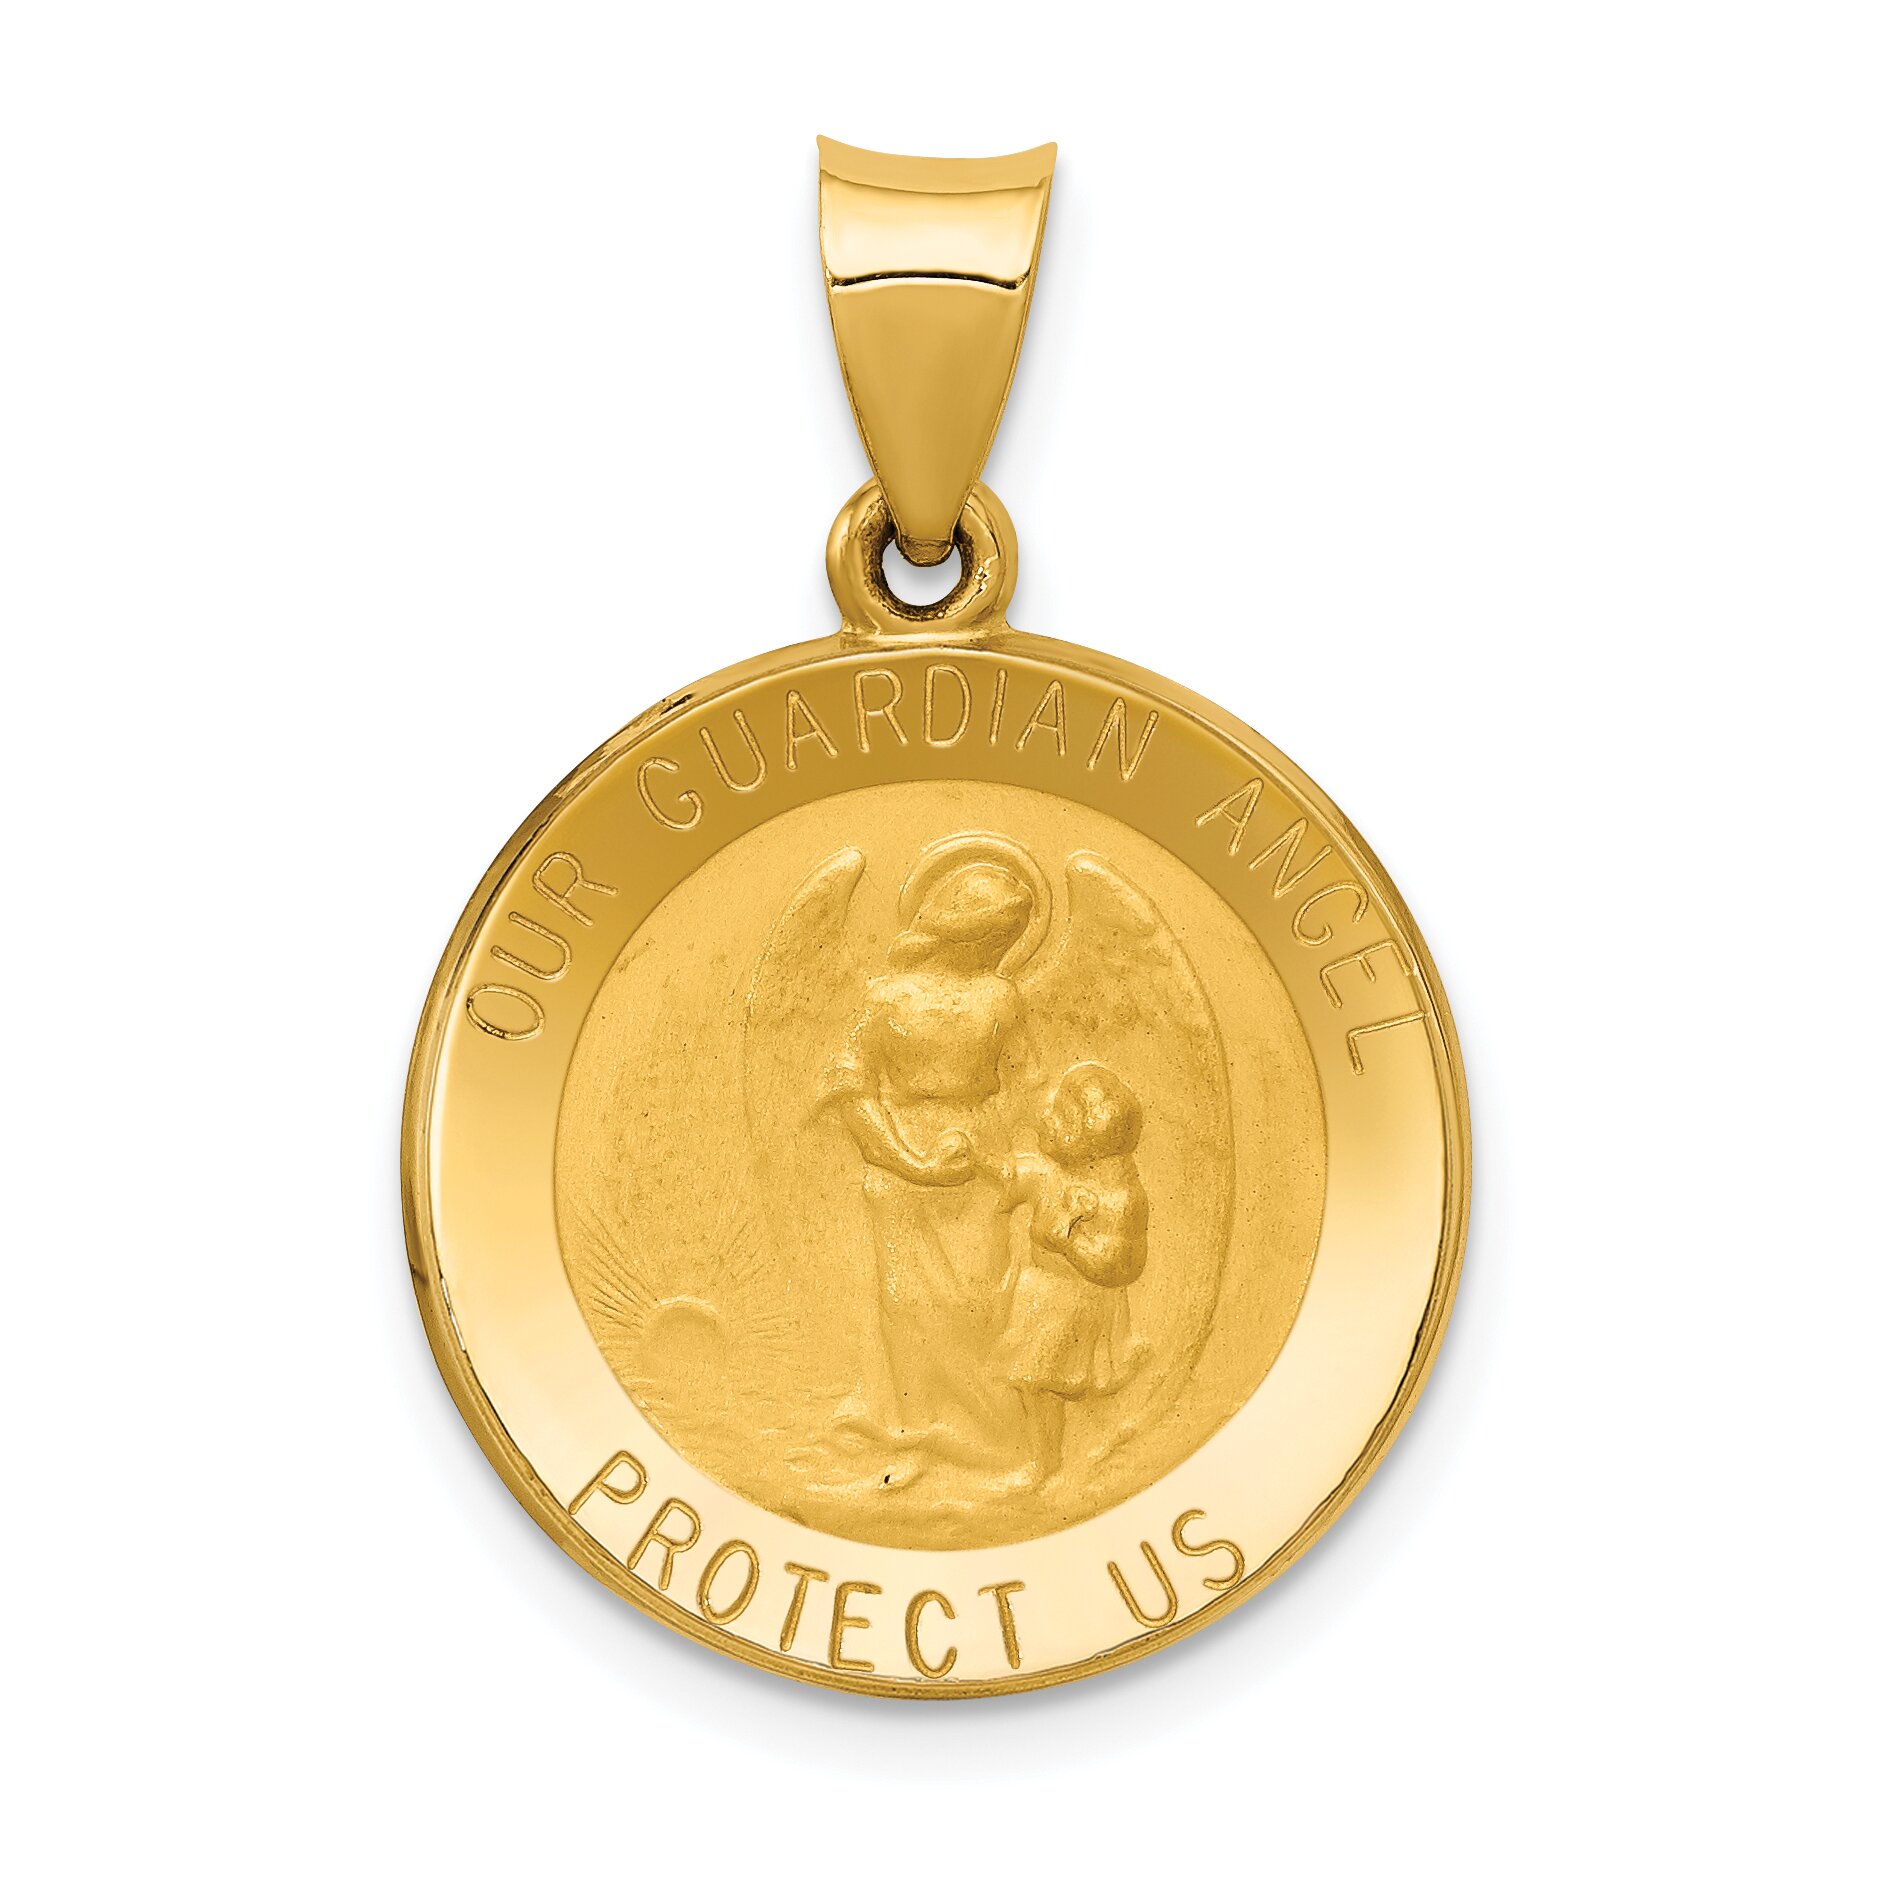 Findingking 14K Gold Guardian Angel Medal Pendant